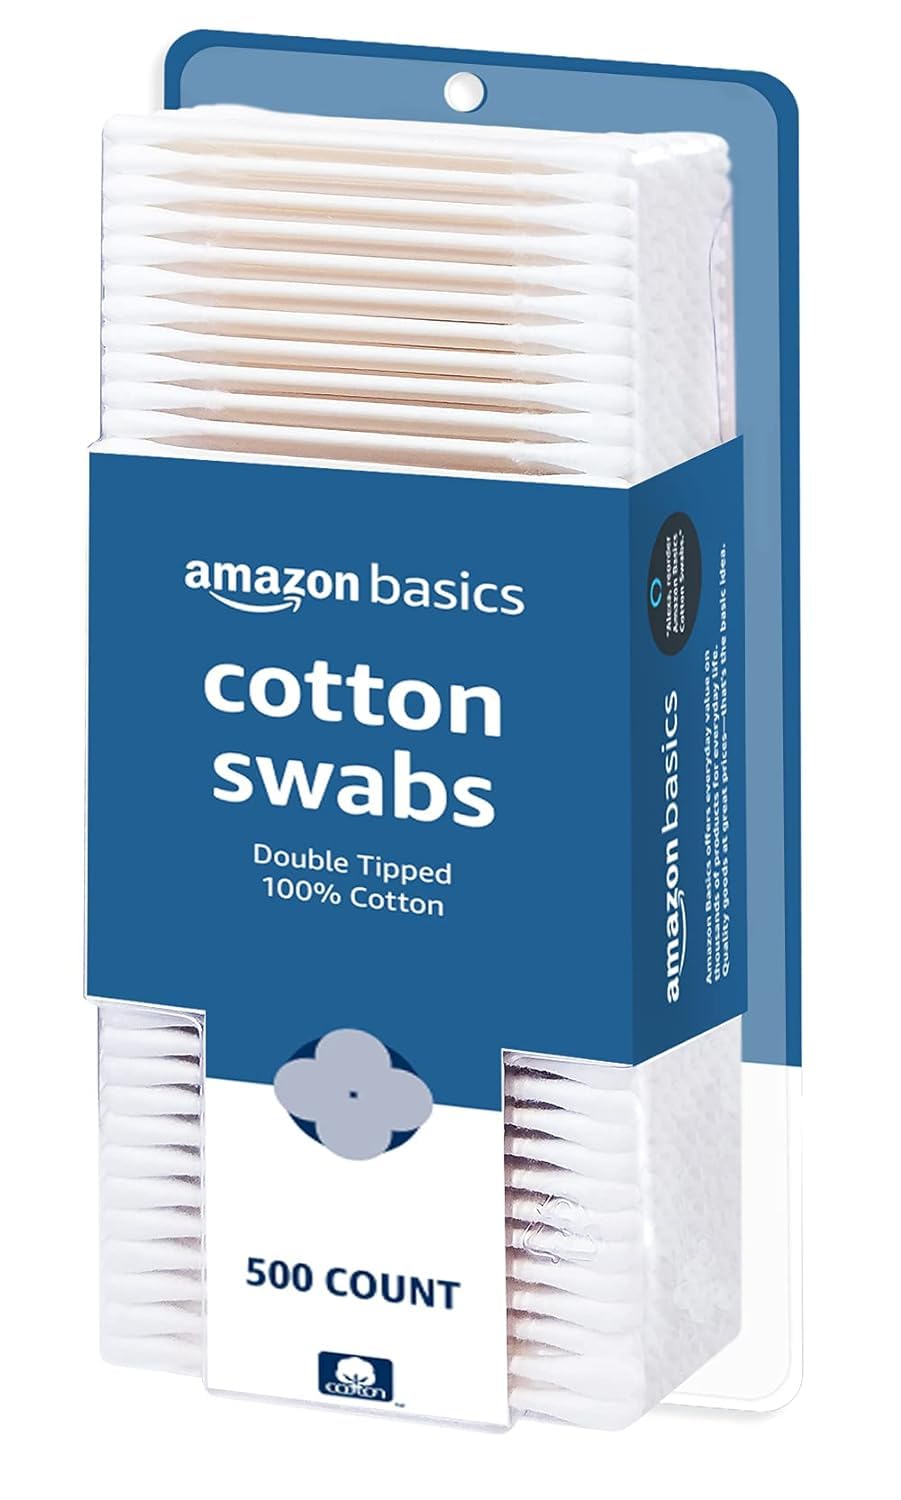 Amazon Basics Cotton Swabs, 500ct, 1-Pack $2.53